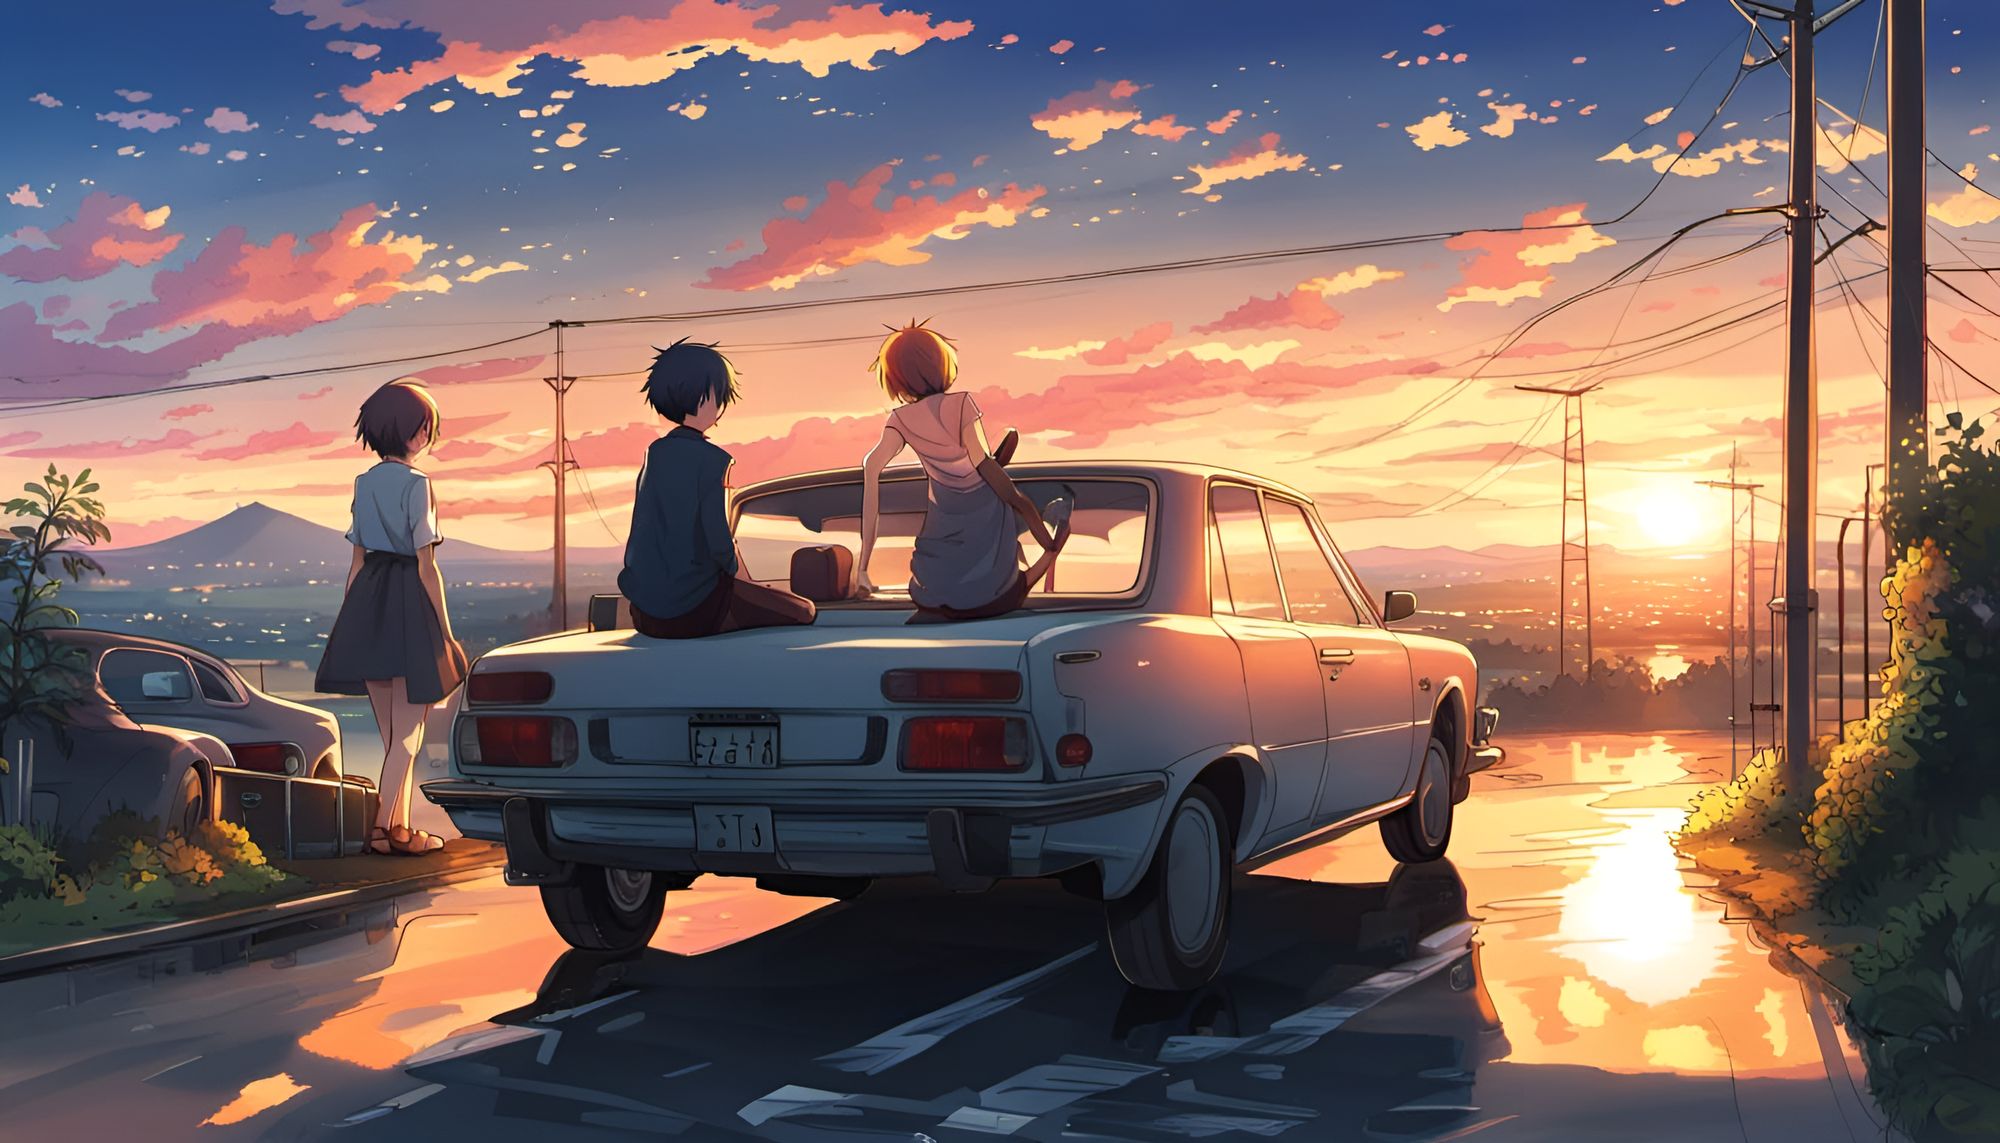 Real Drive Anime Reviews | Anime-Planet